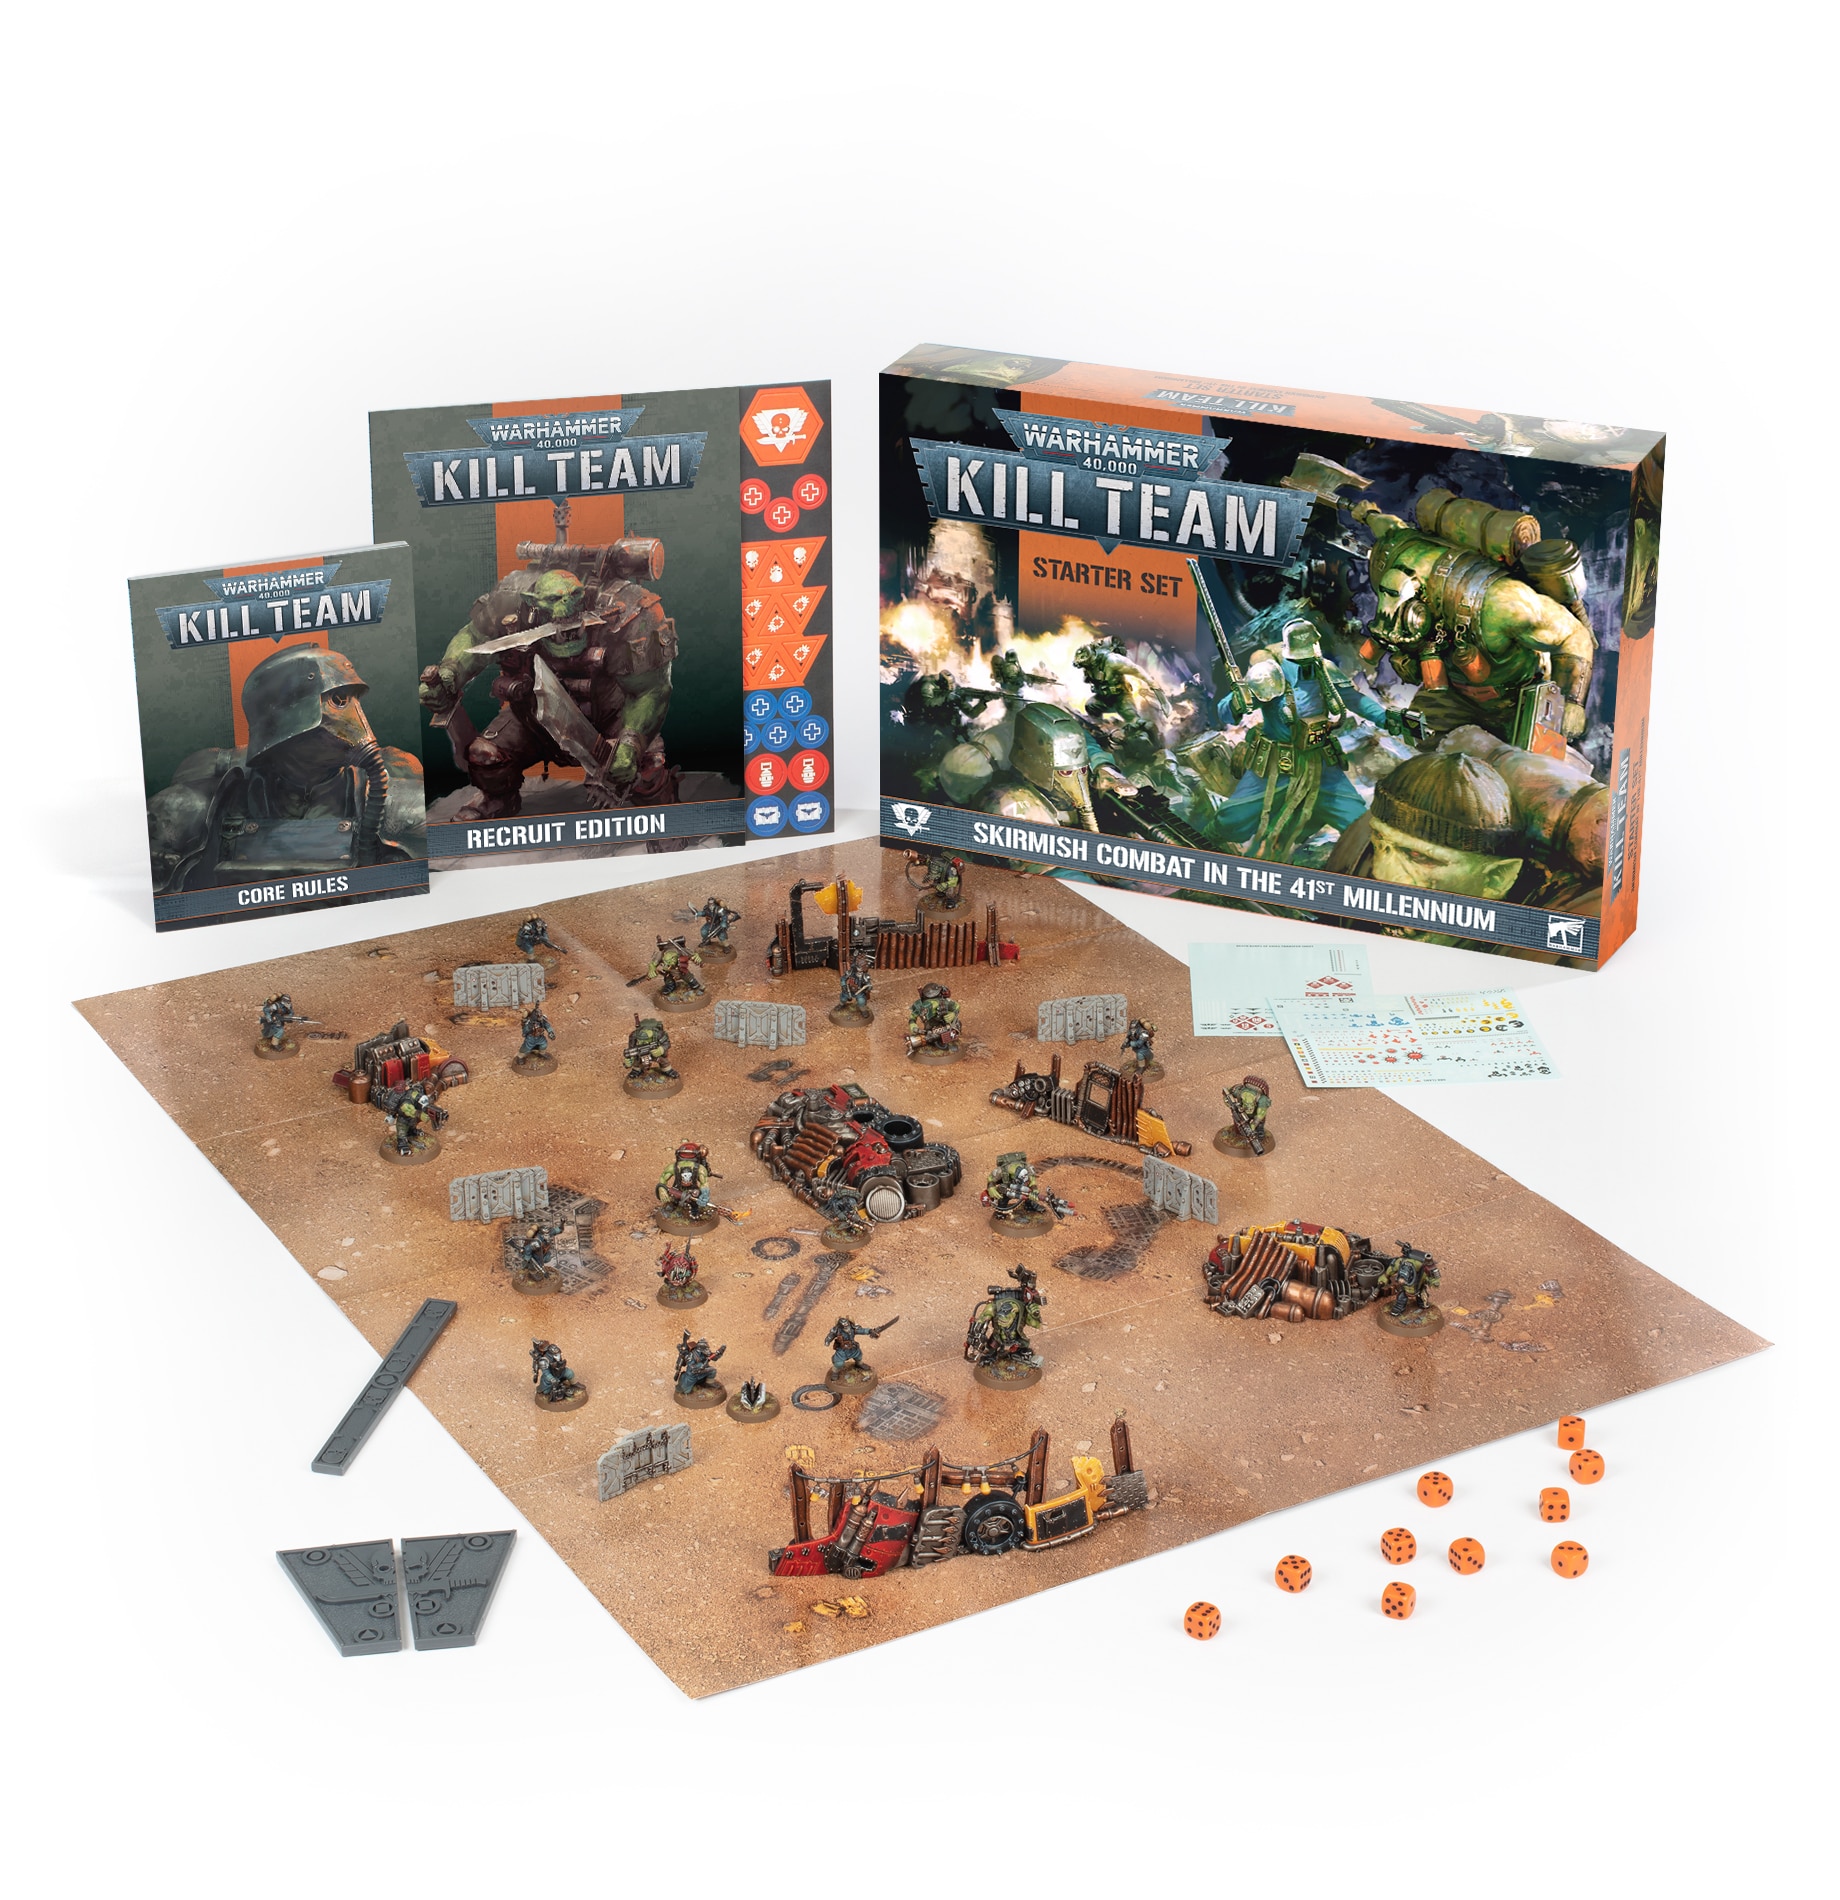 GW Warhammer 40k Kill Team Moroch Box Set